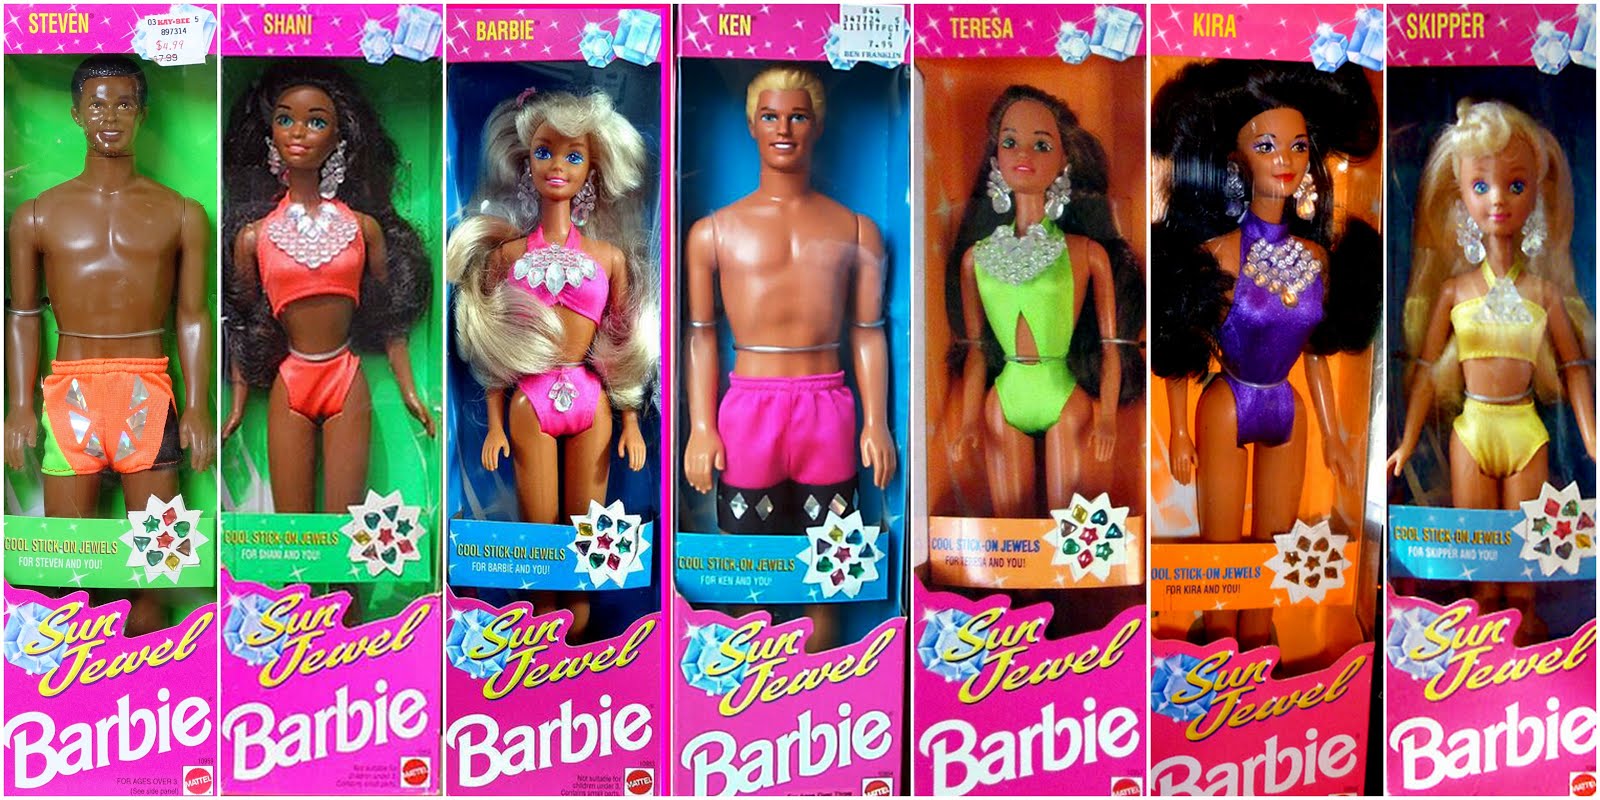 Barbie Sun Jewel dolls